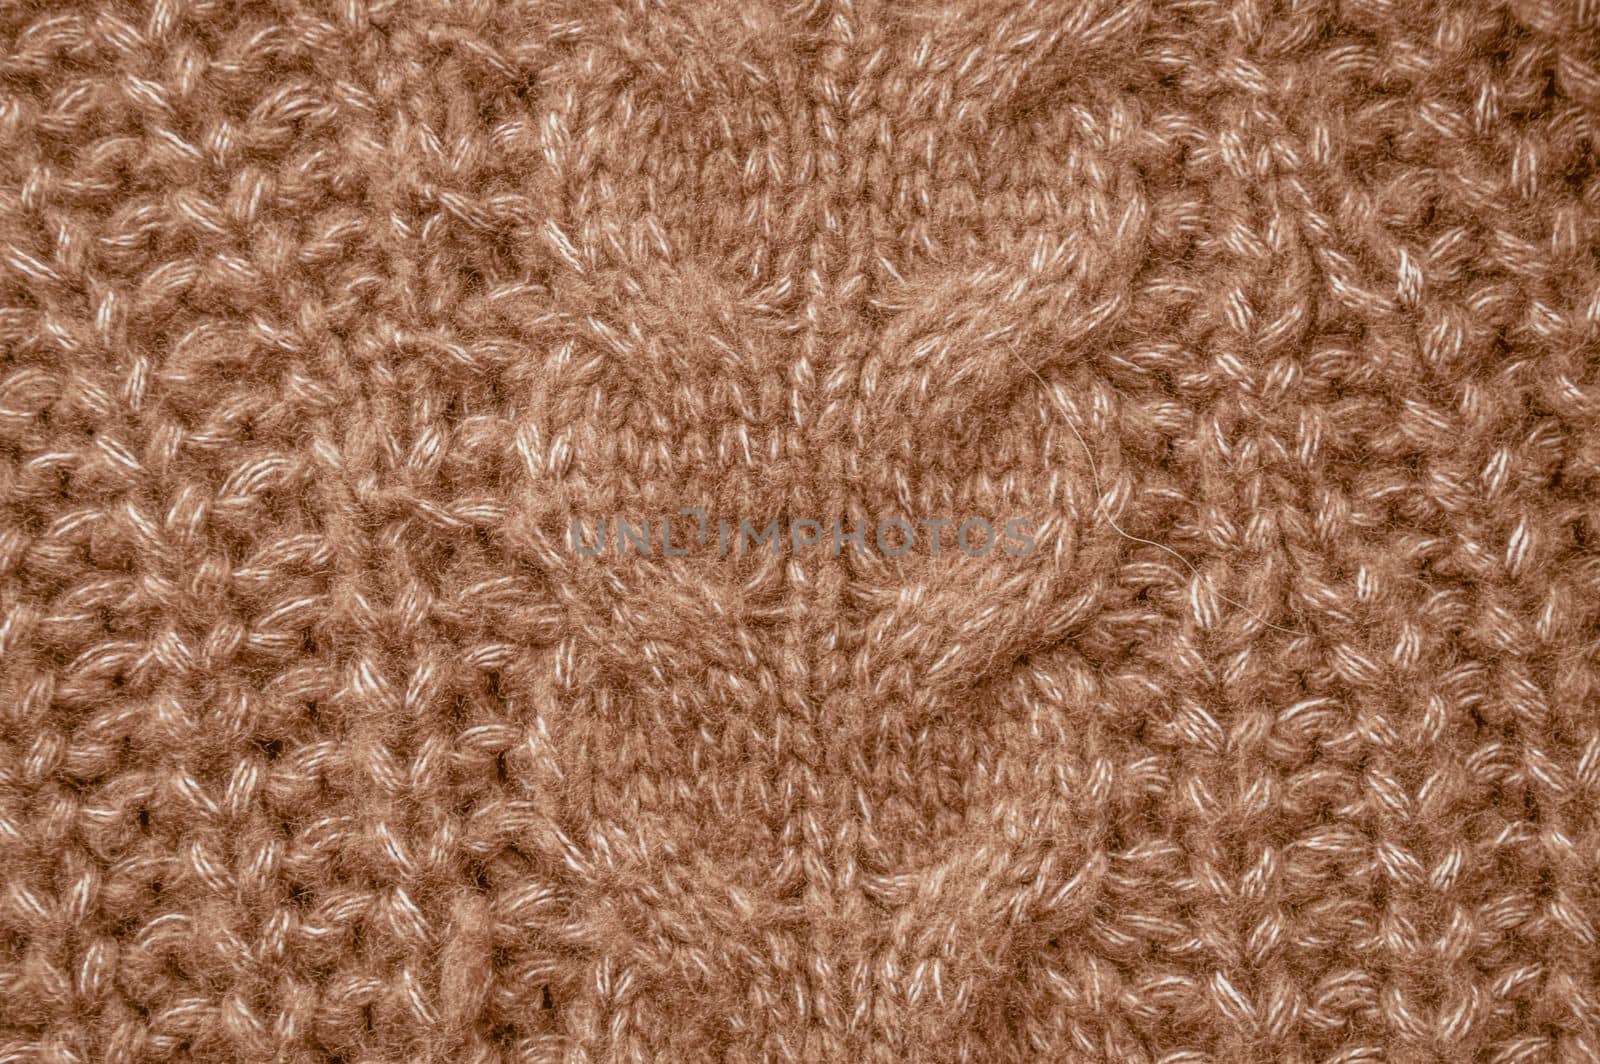 Knitted Texture. Vintage Woven Texture. Knitwear Christmas Background. Fiber Knitting Texture. Cotton Thread. Scandinavian Warm Yarn. Macro Jumper Wallpaper. Structure Knitting Texture.